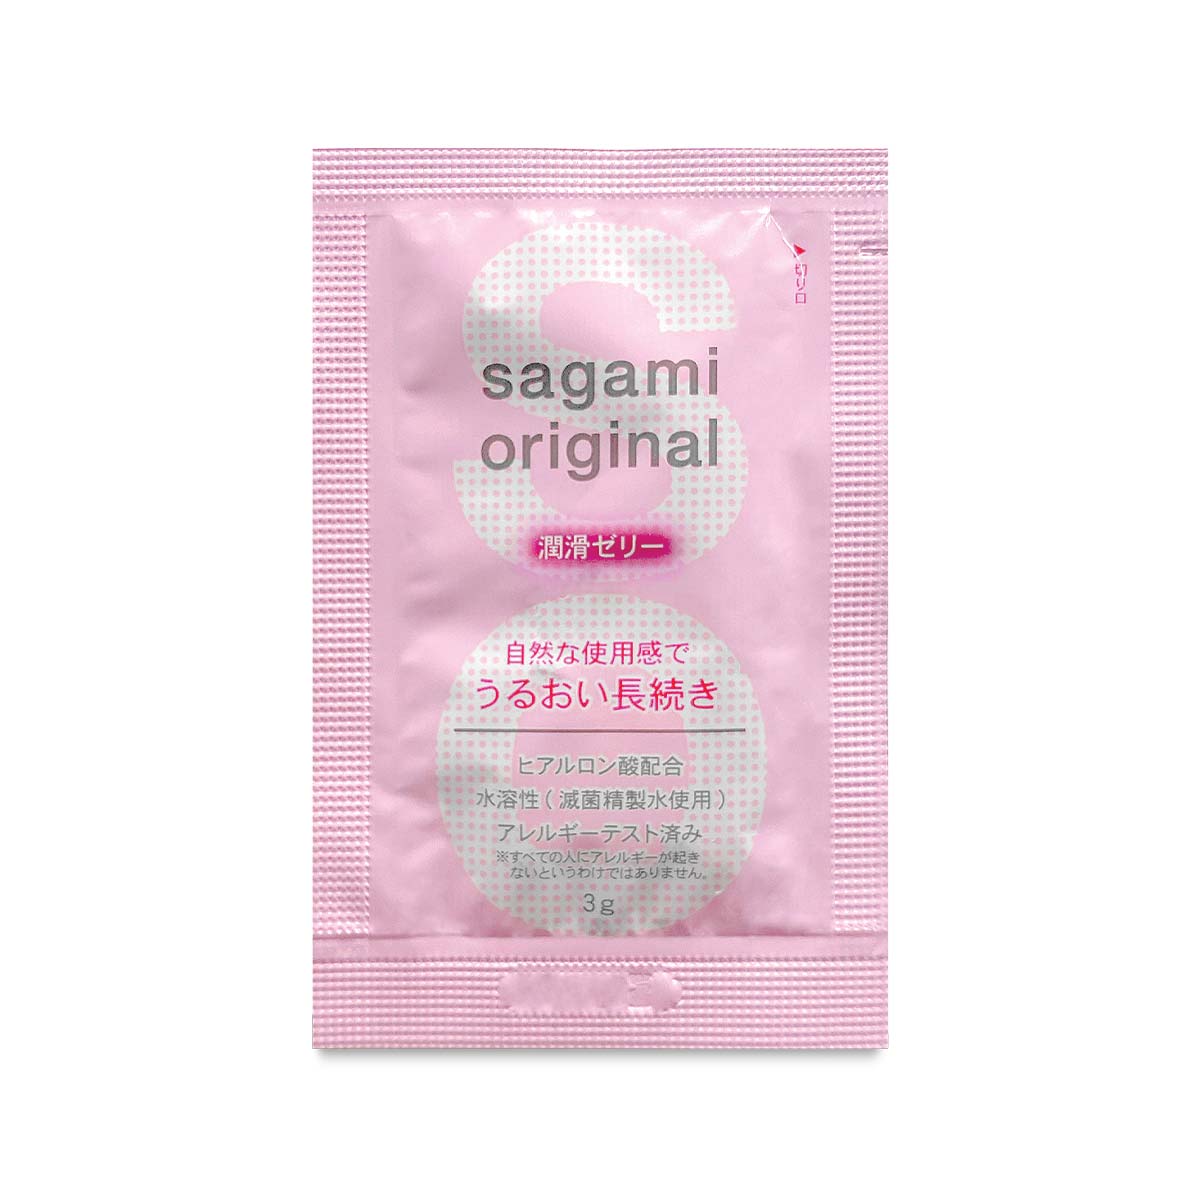 Sagami Original Lubricating Gel Sachet 1's Pack